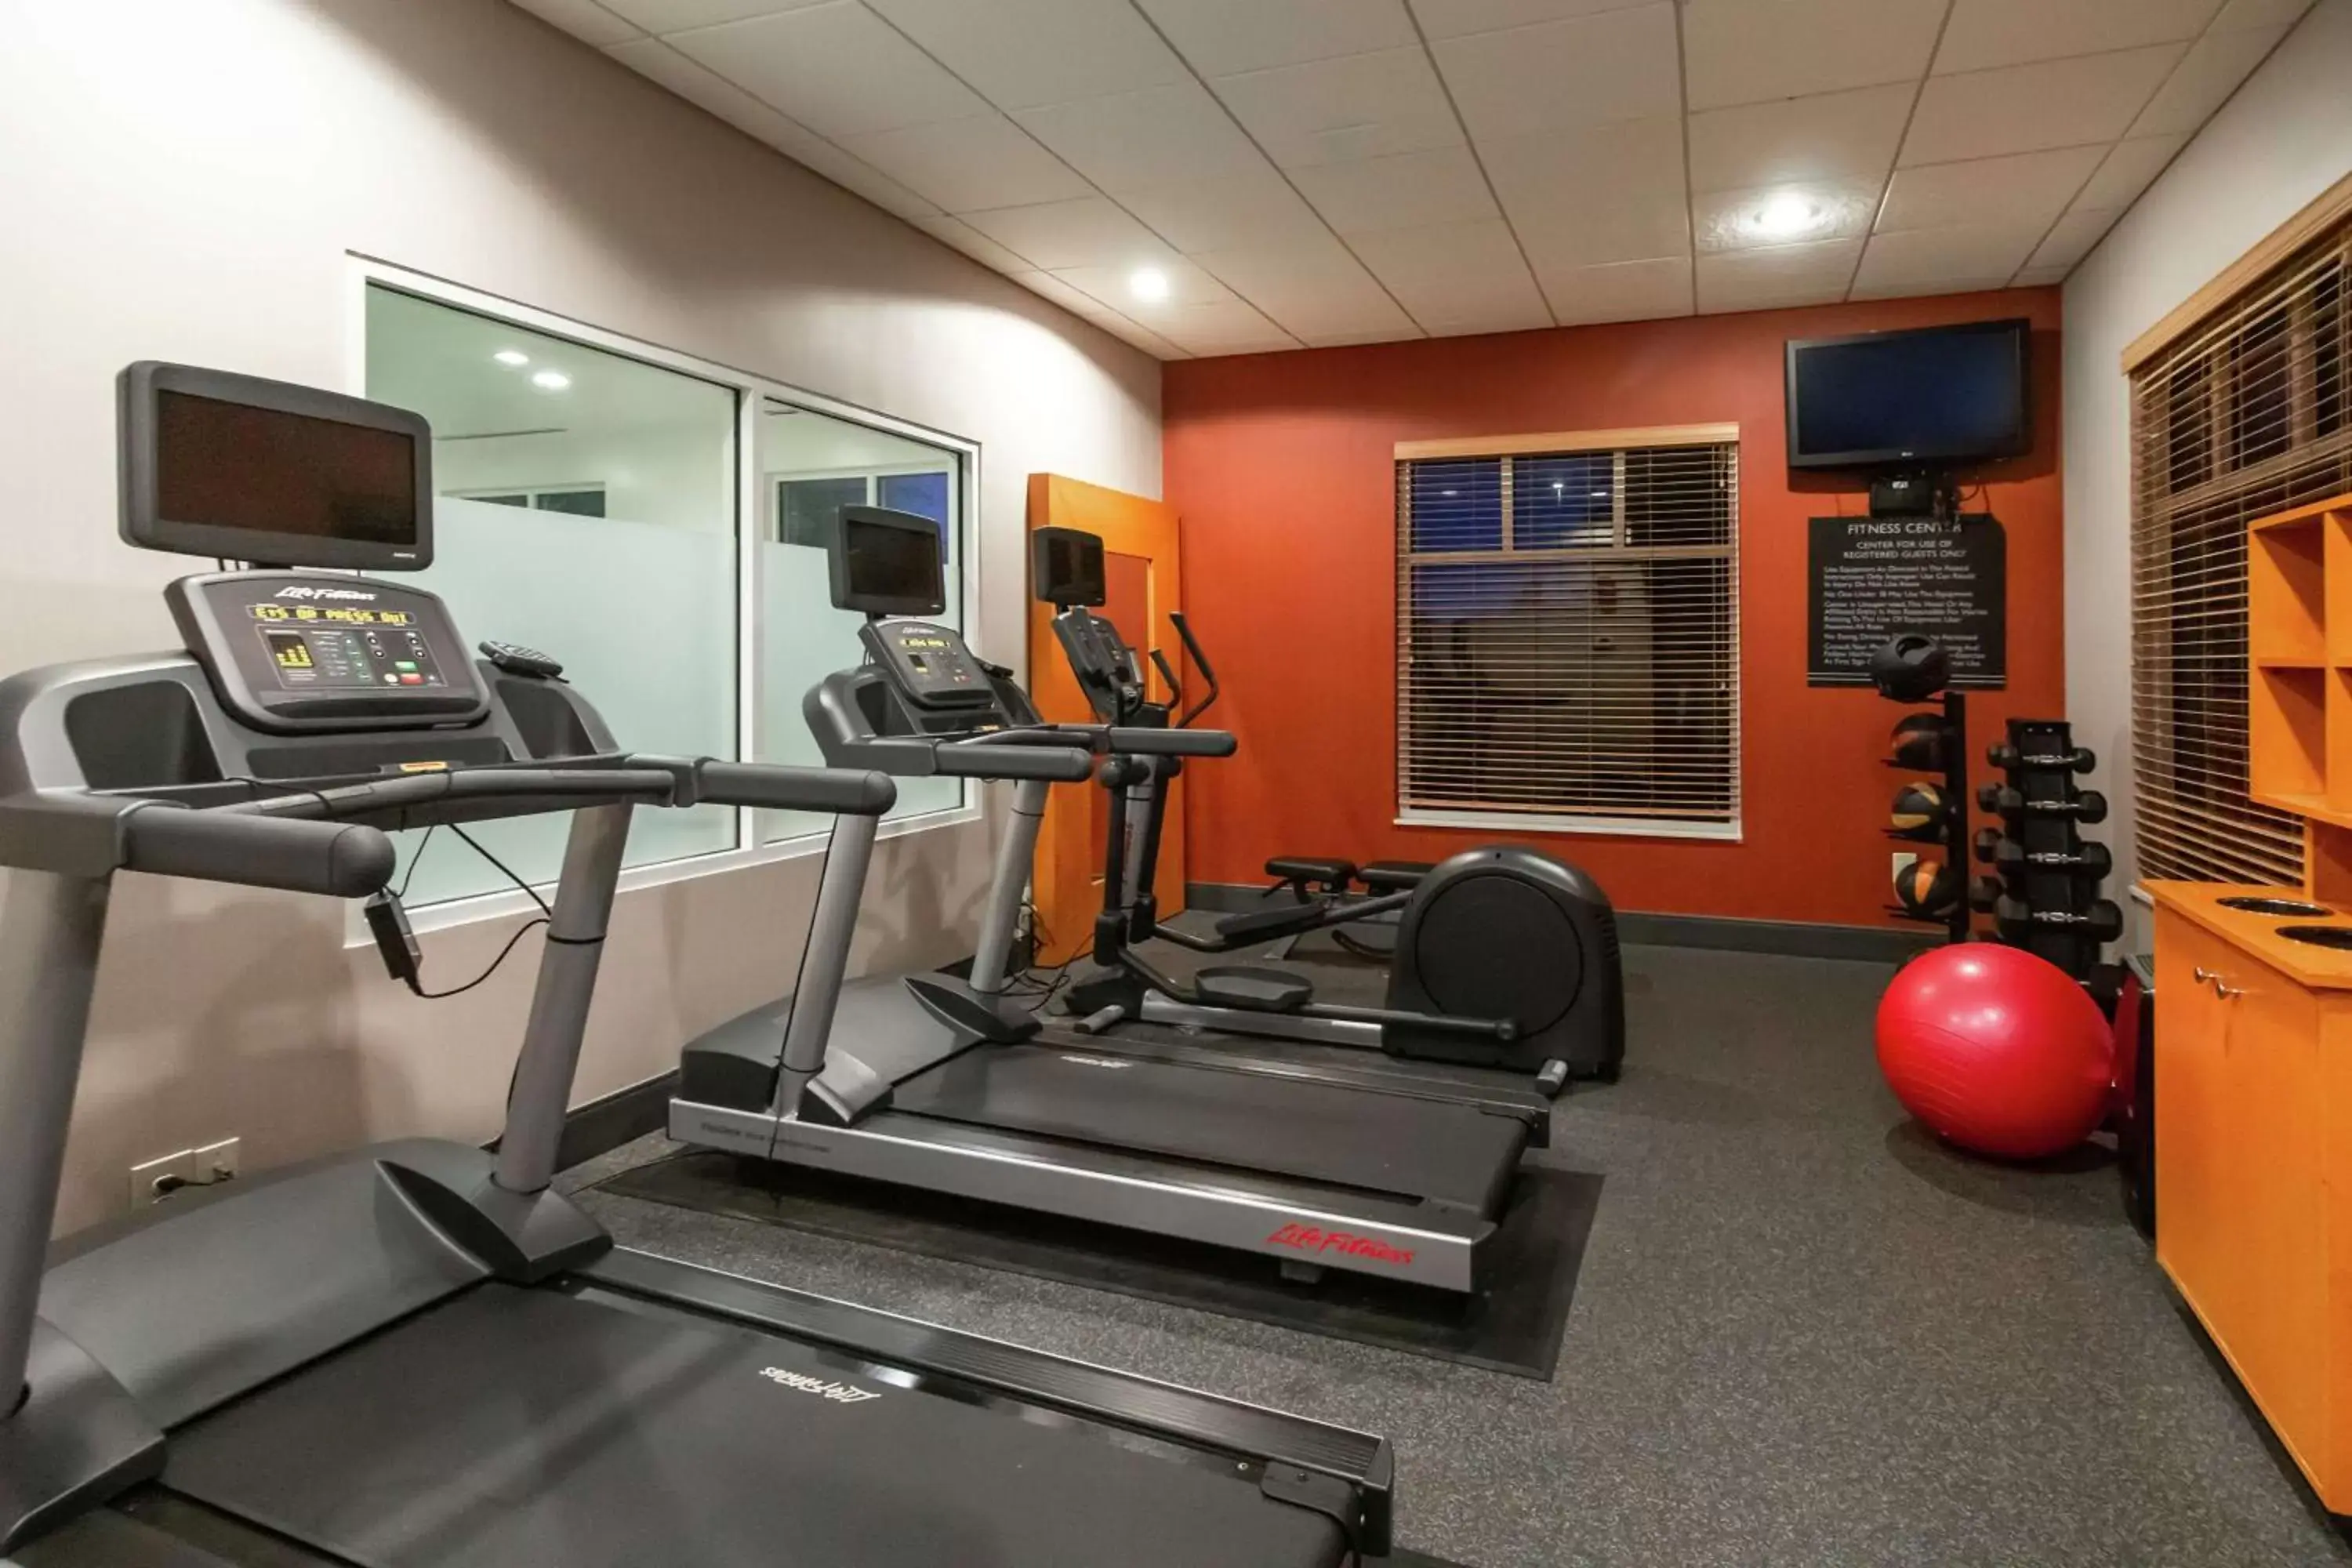 Fitness centre/facilities, Fitness Center/Facilities in Hilton Garden Inn Columbus/Dublin